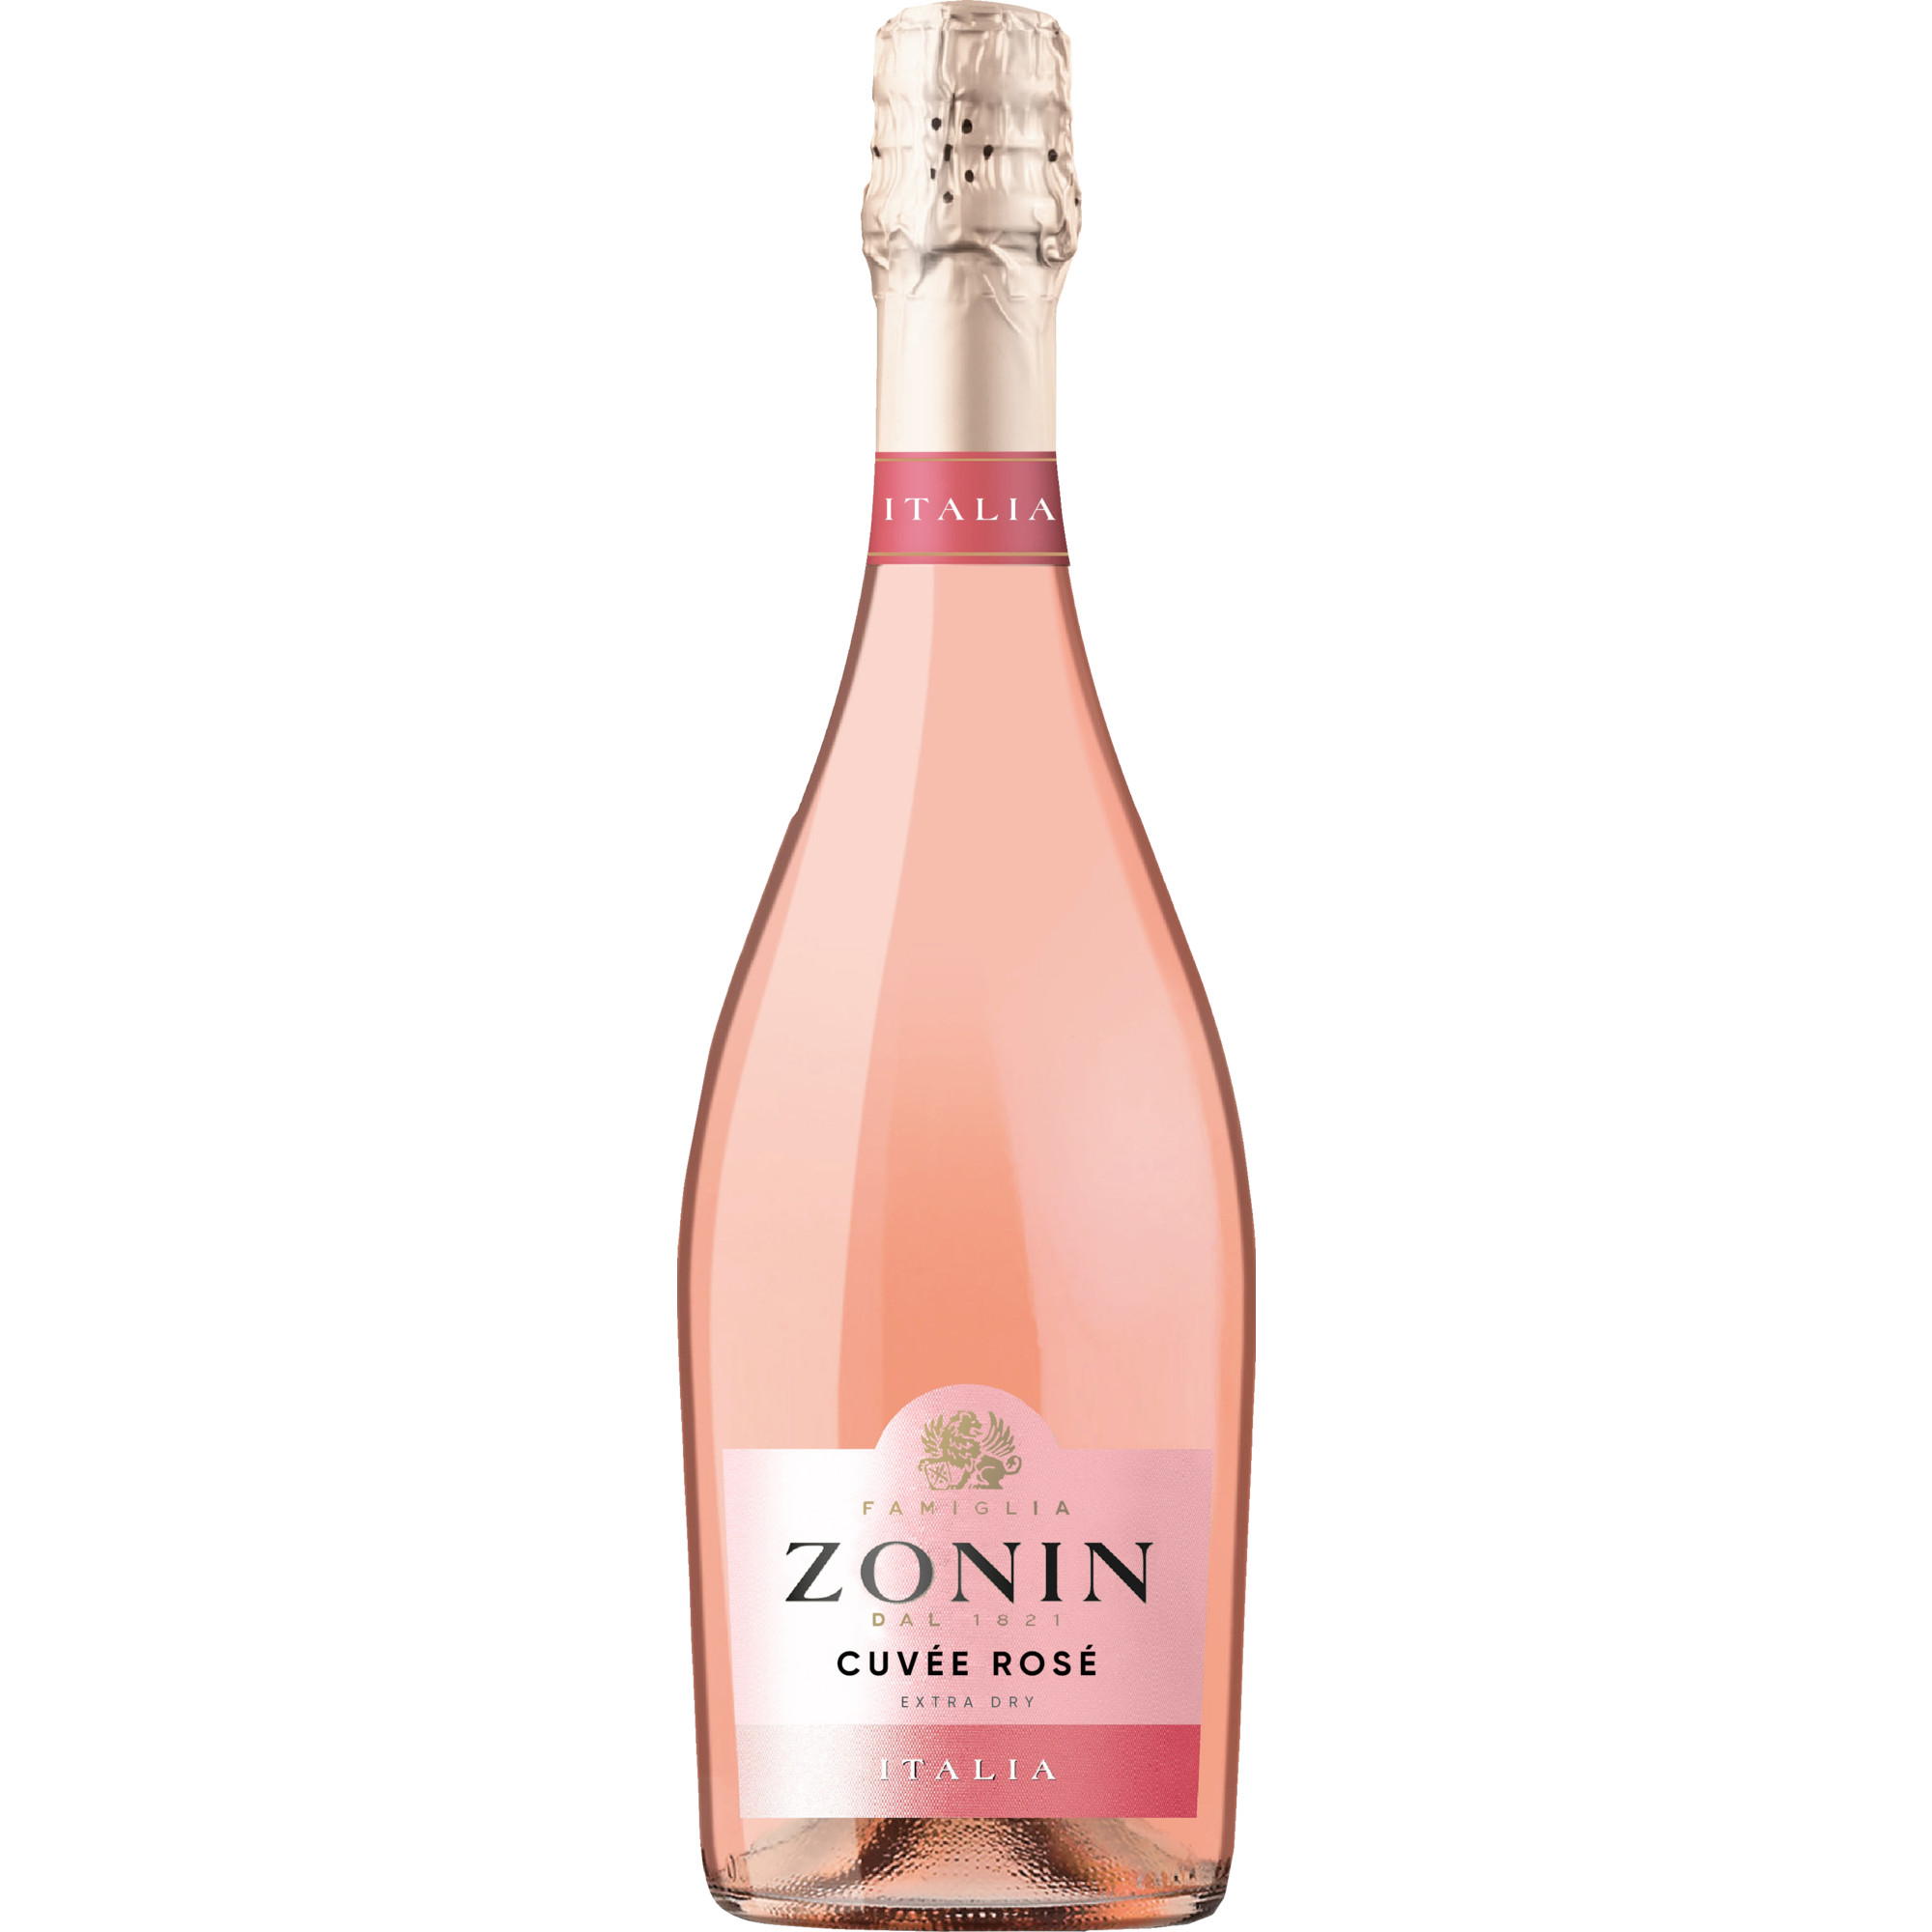 Image of Zonin Cuvee Rosé Spumante, Brut, Vino Spumante, Venetien, Schaumwein